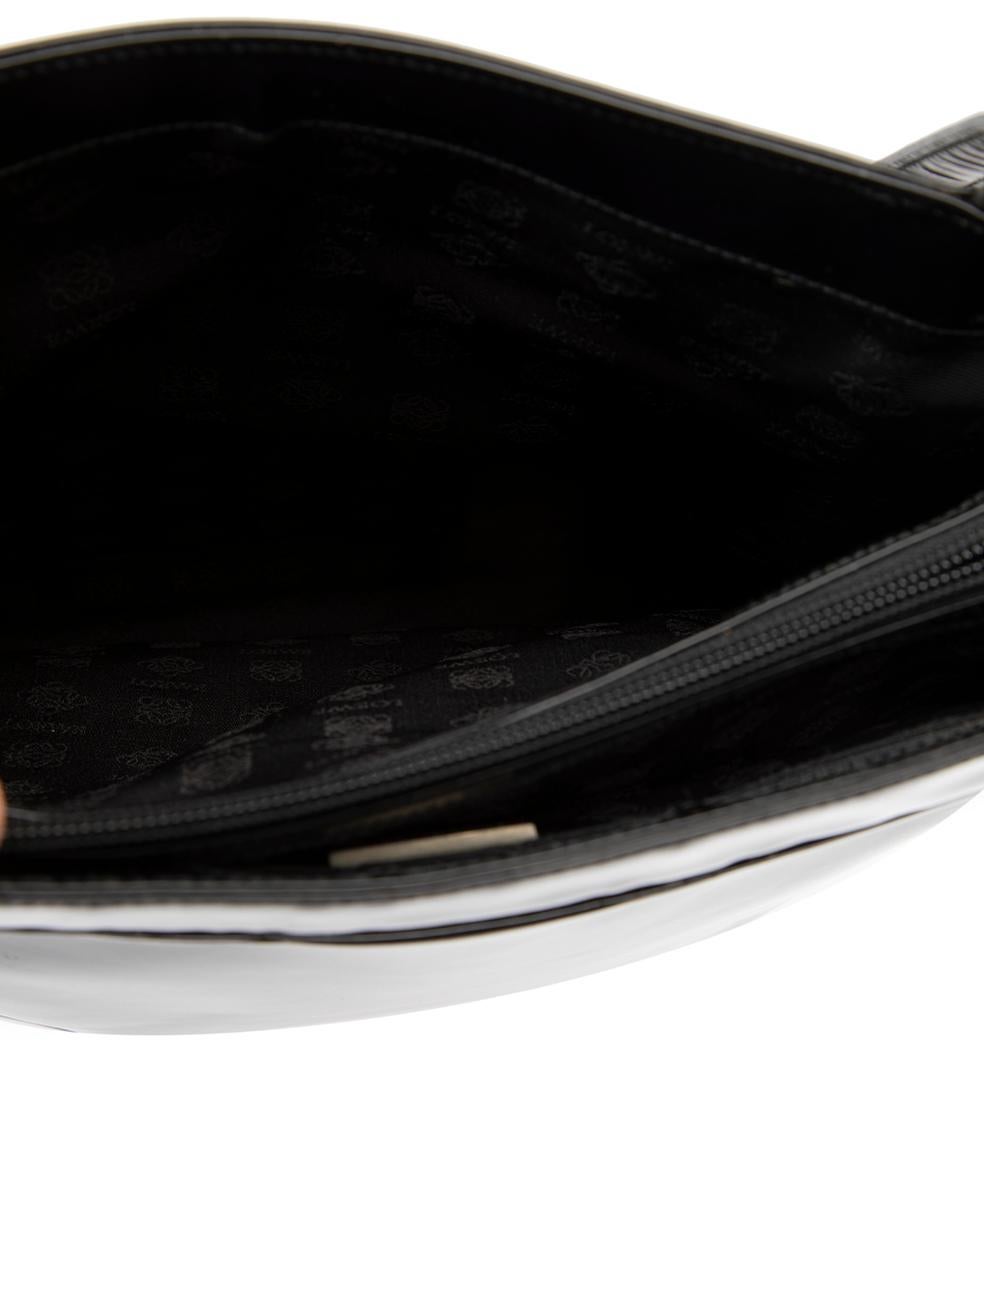 Loewe Women's Black Leather Top Handle Tote Bag For Sale 2